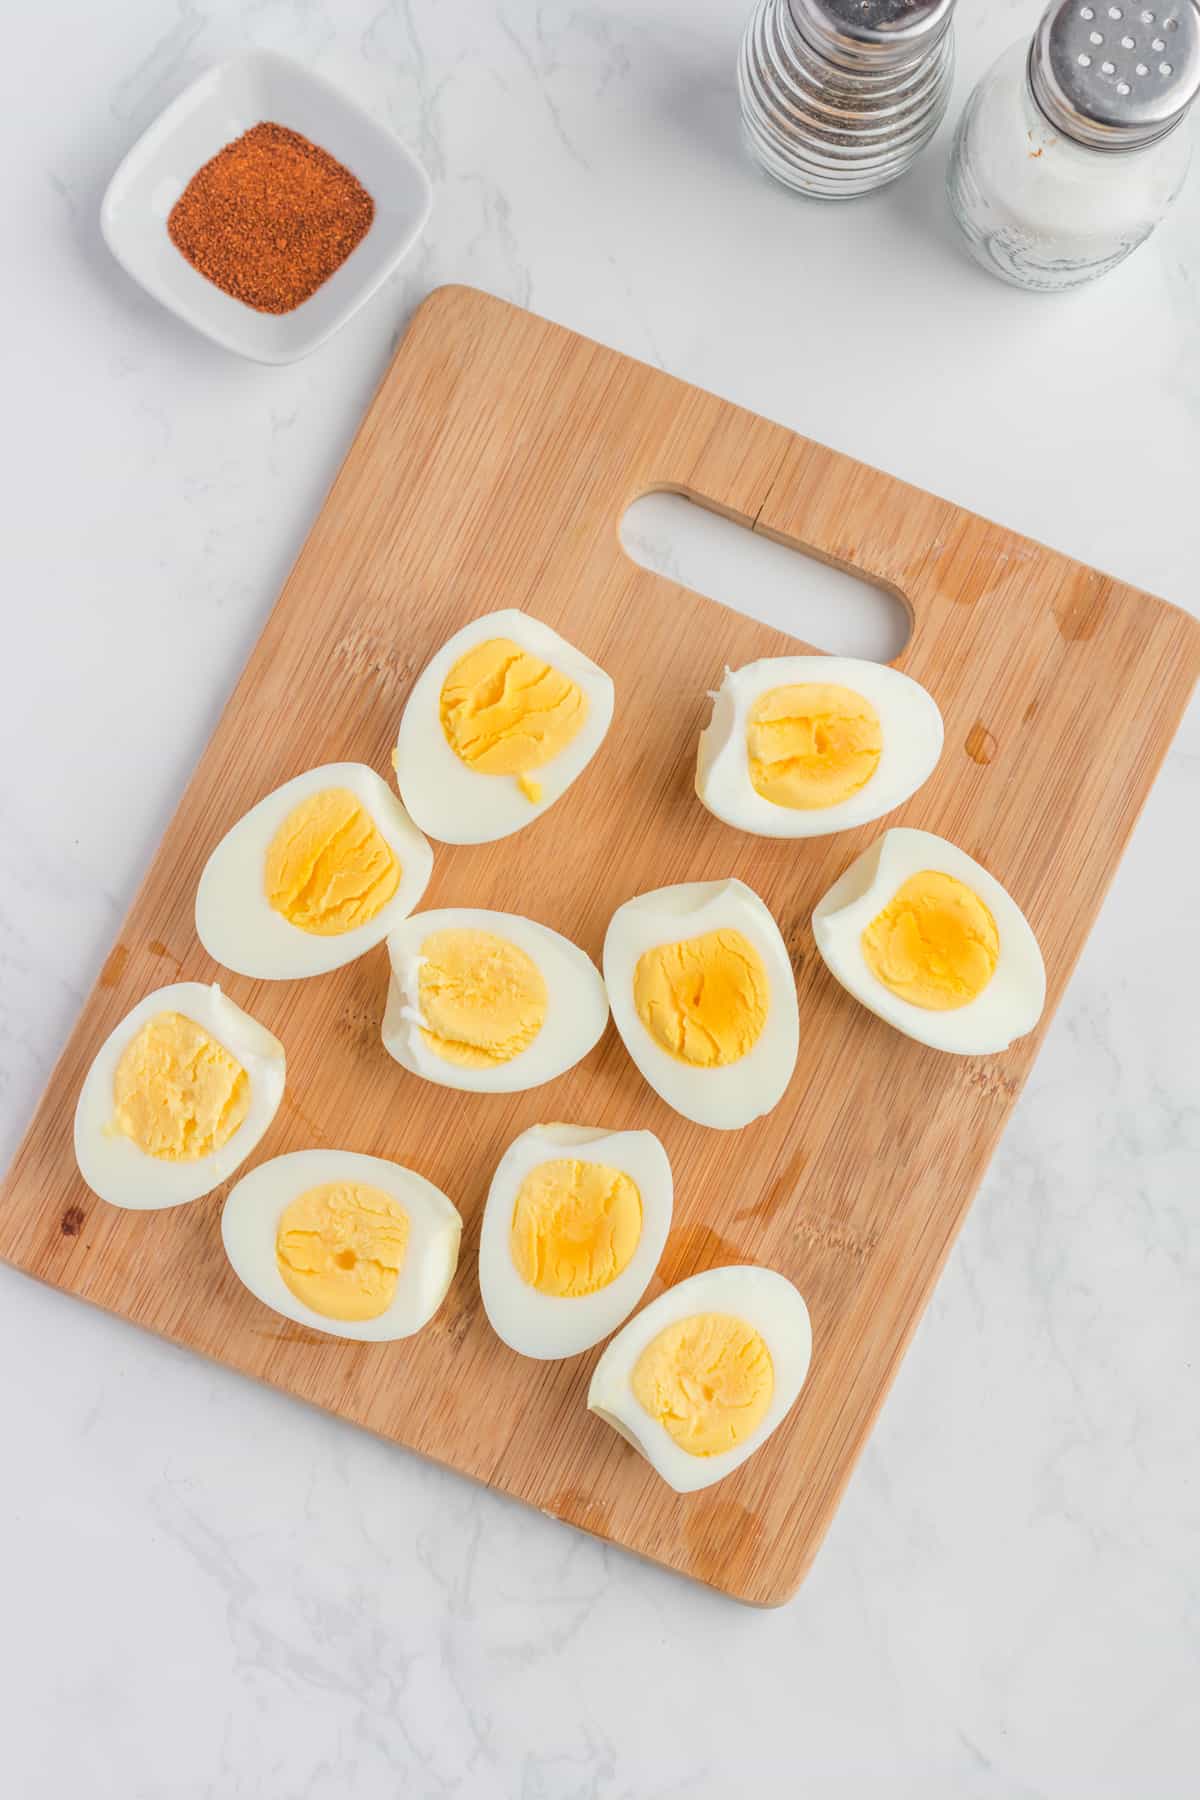 Boiled eggs cut in half on a wooden board.